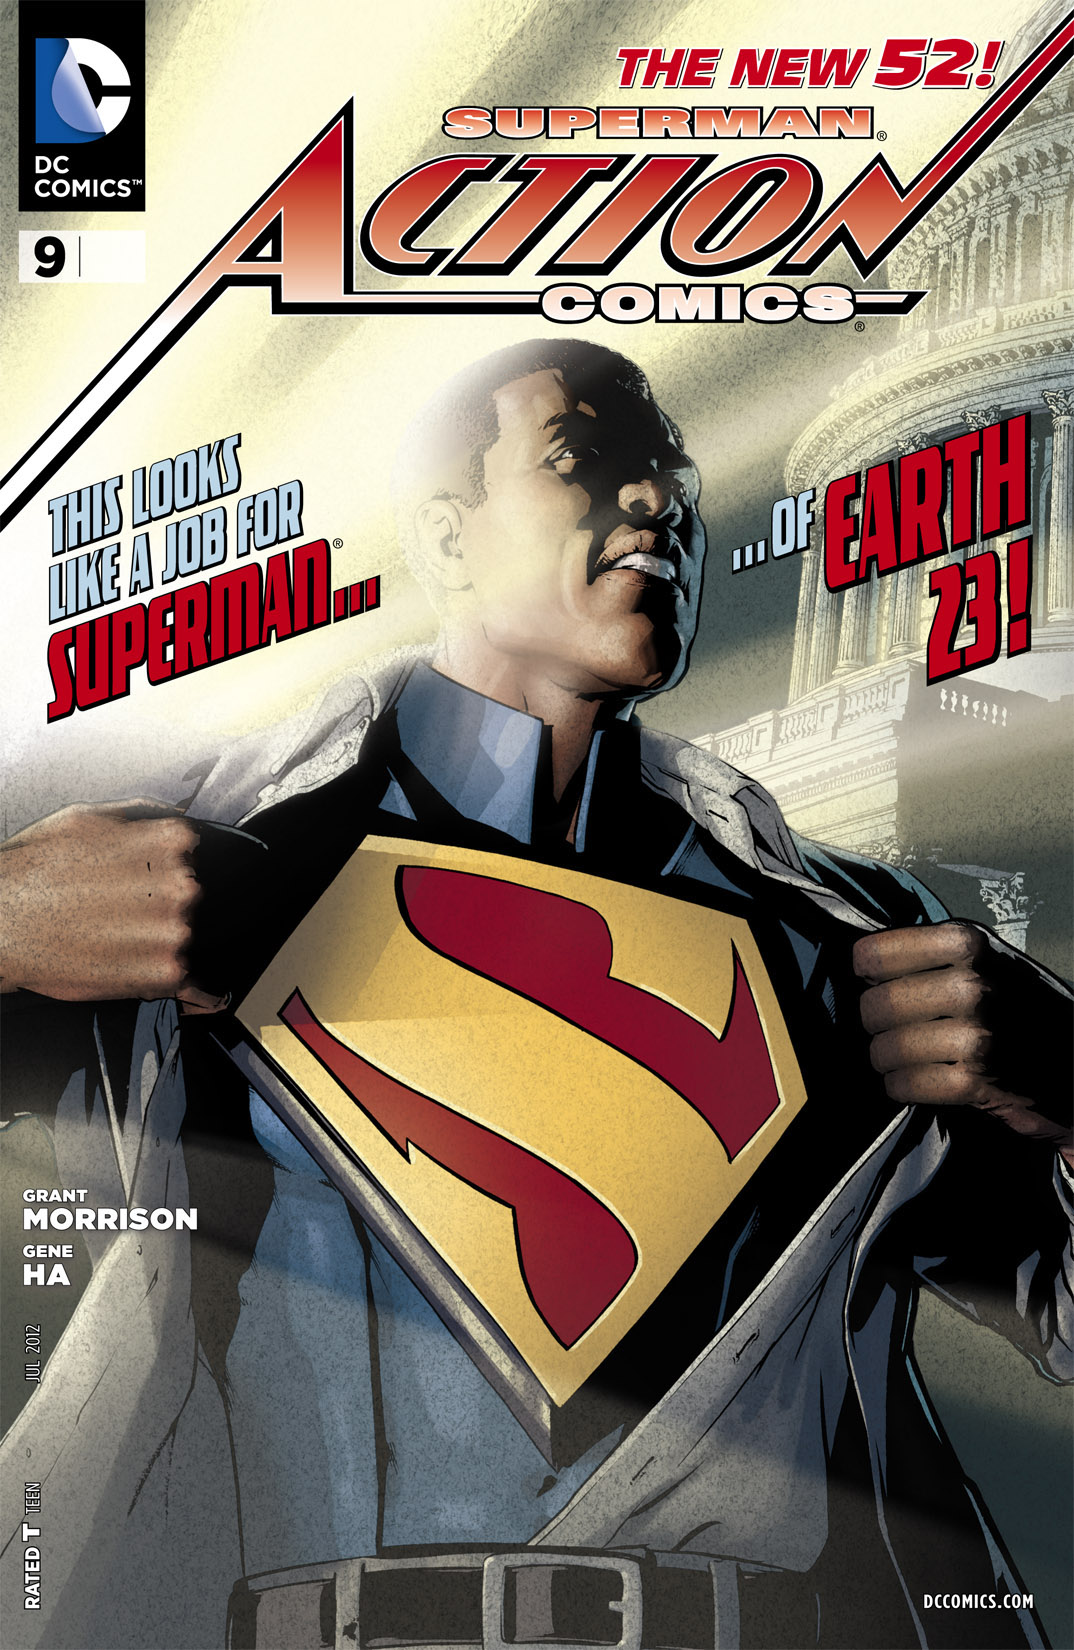 Action Comics (2011-) #9 preview images